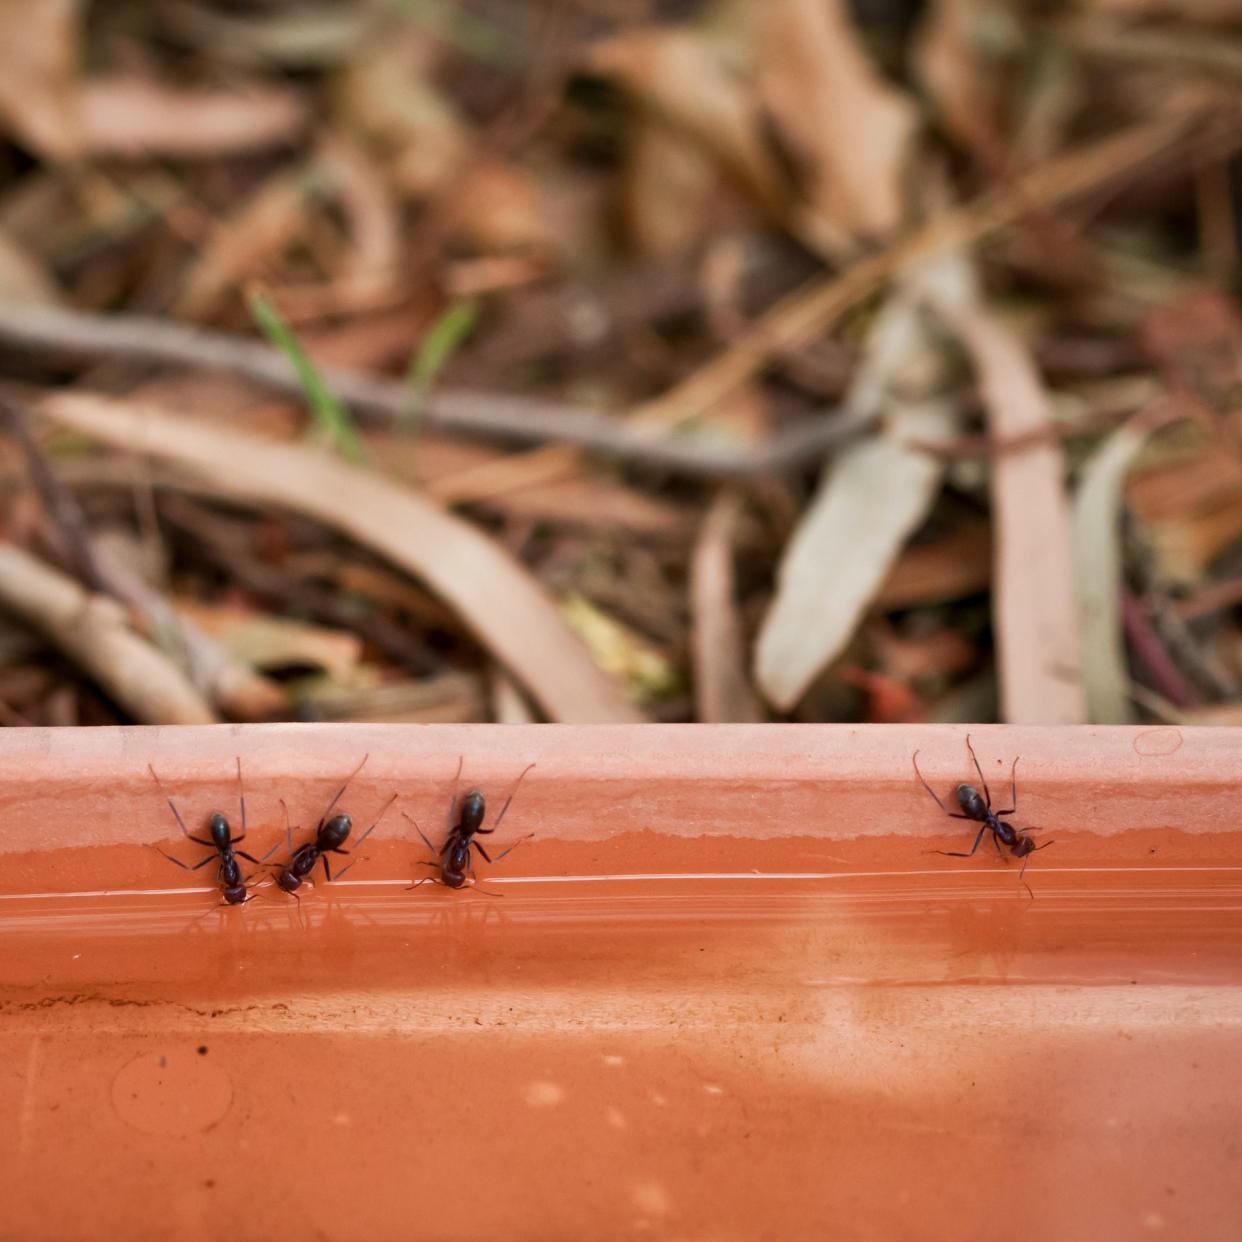  Ants on a garden planter. 